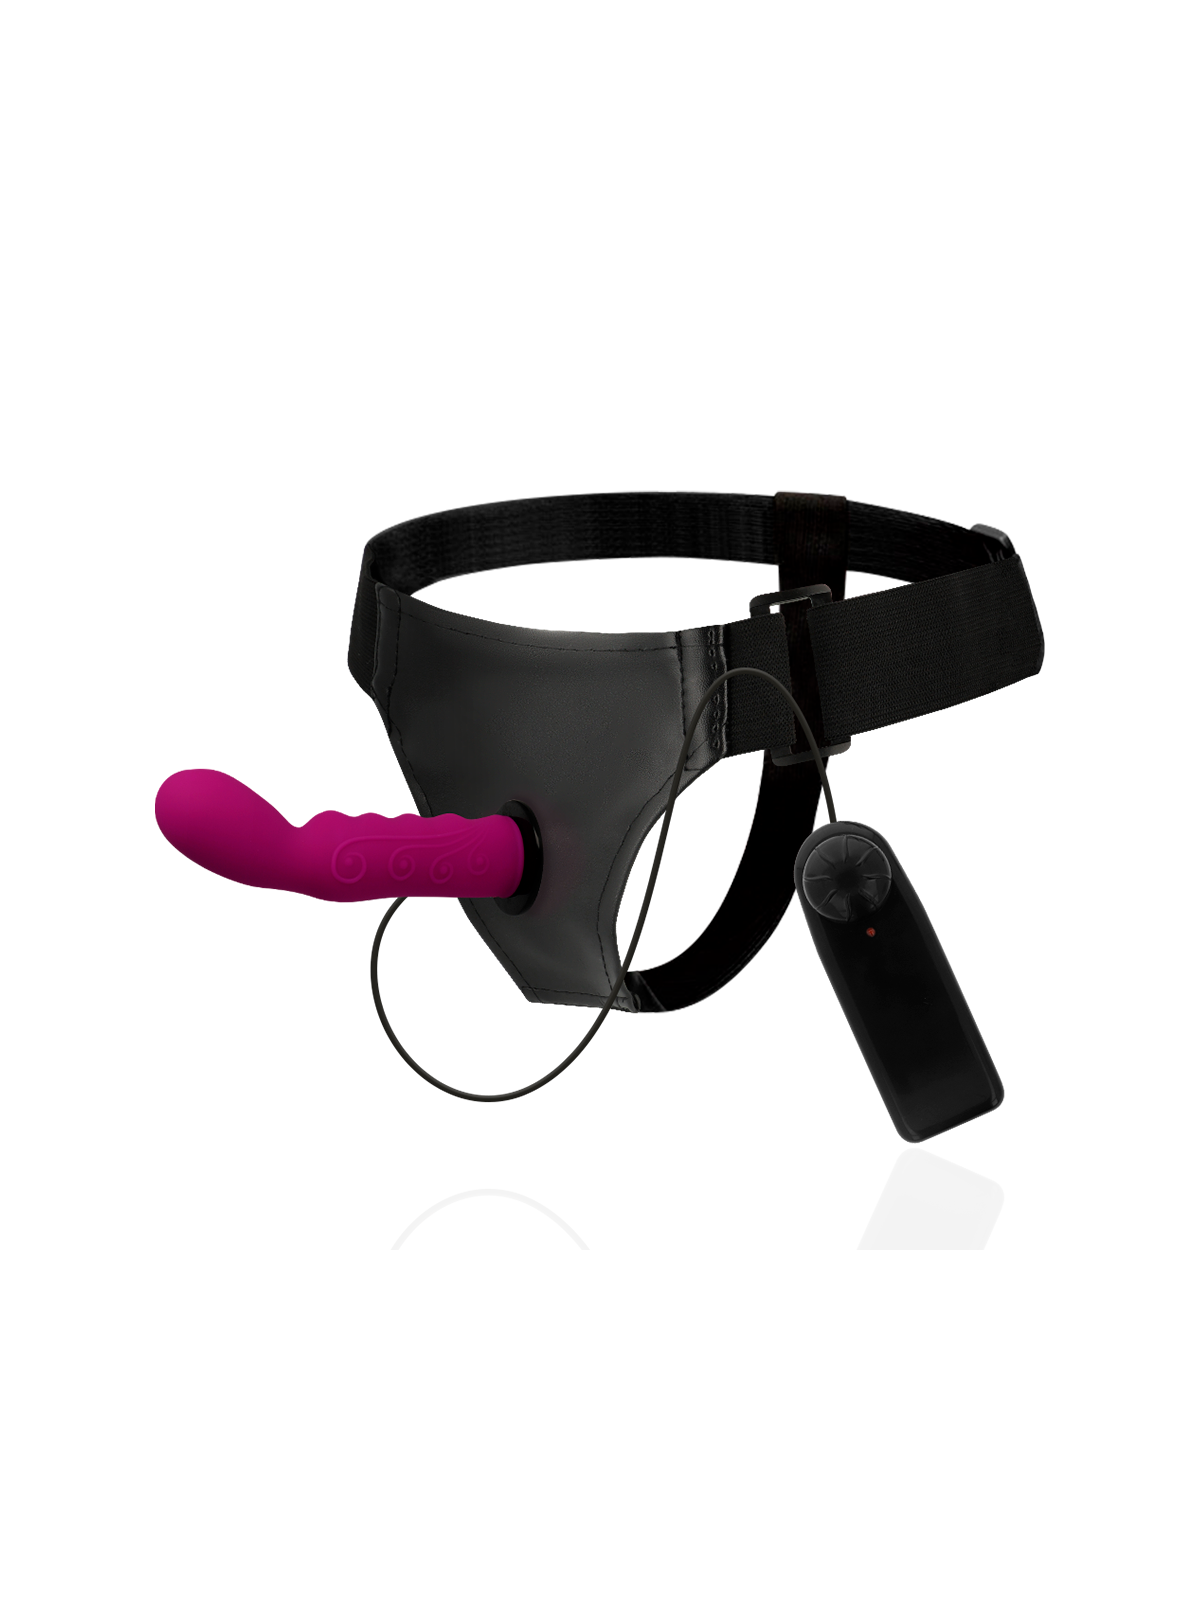 Harness Attraction Arnés Walter Con Vibración 15.5 X 3.7 cm - Comprar Arnés dildo sexual Harness Attraction - Arneses sexuales (